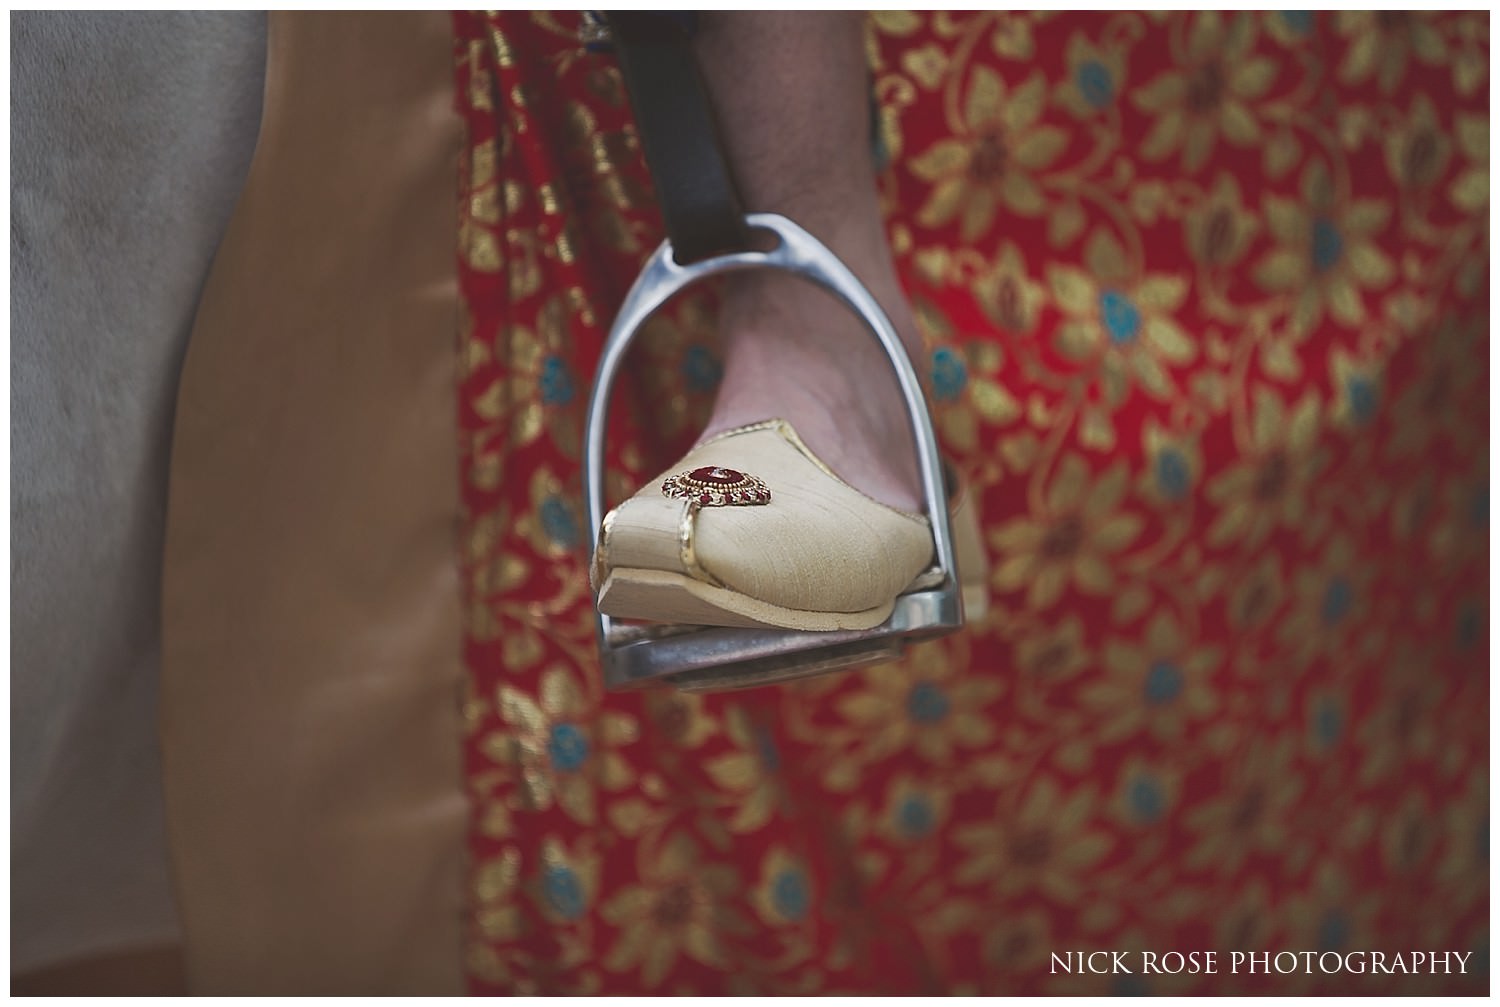  Hindu wedding shoe inside a stirrup before an Indian wedding in London 